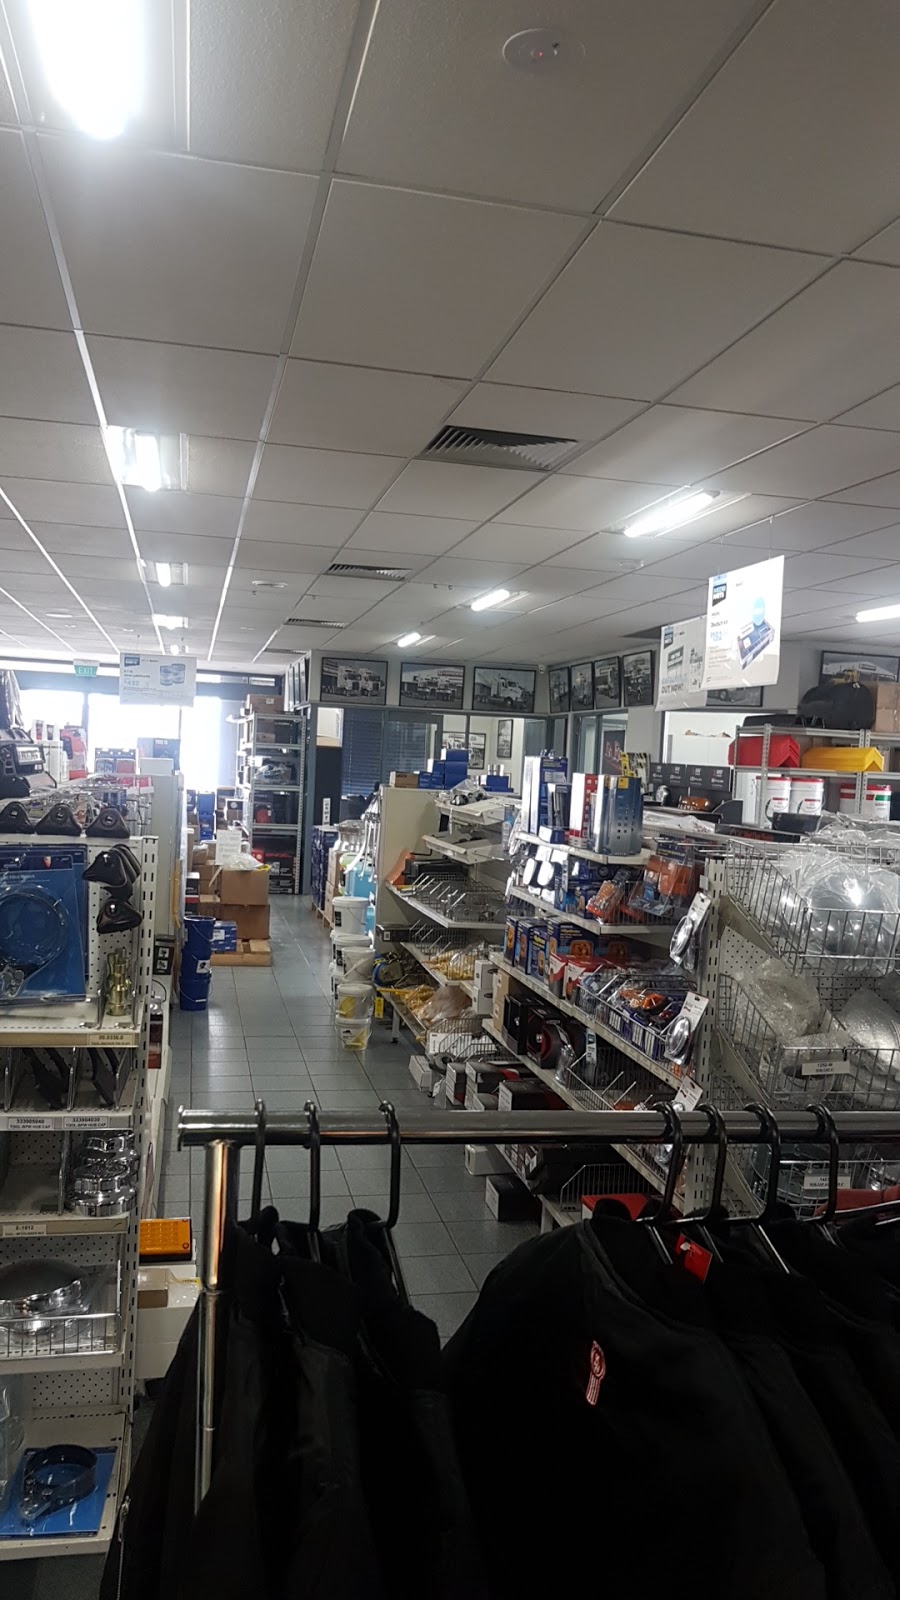 Graham Thomson Motors | car repair | 138-144 New Dookie Rd, Shepparton VIC 3630, Australia | 0358213977 OR +61 3 5821 3977